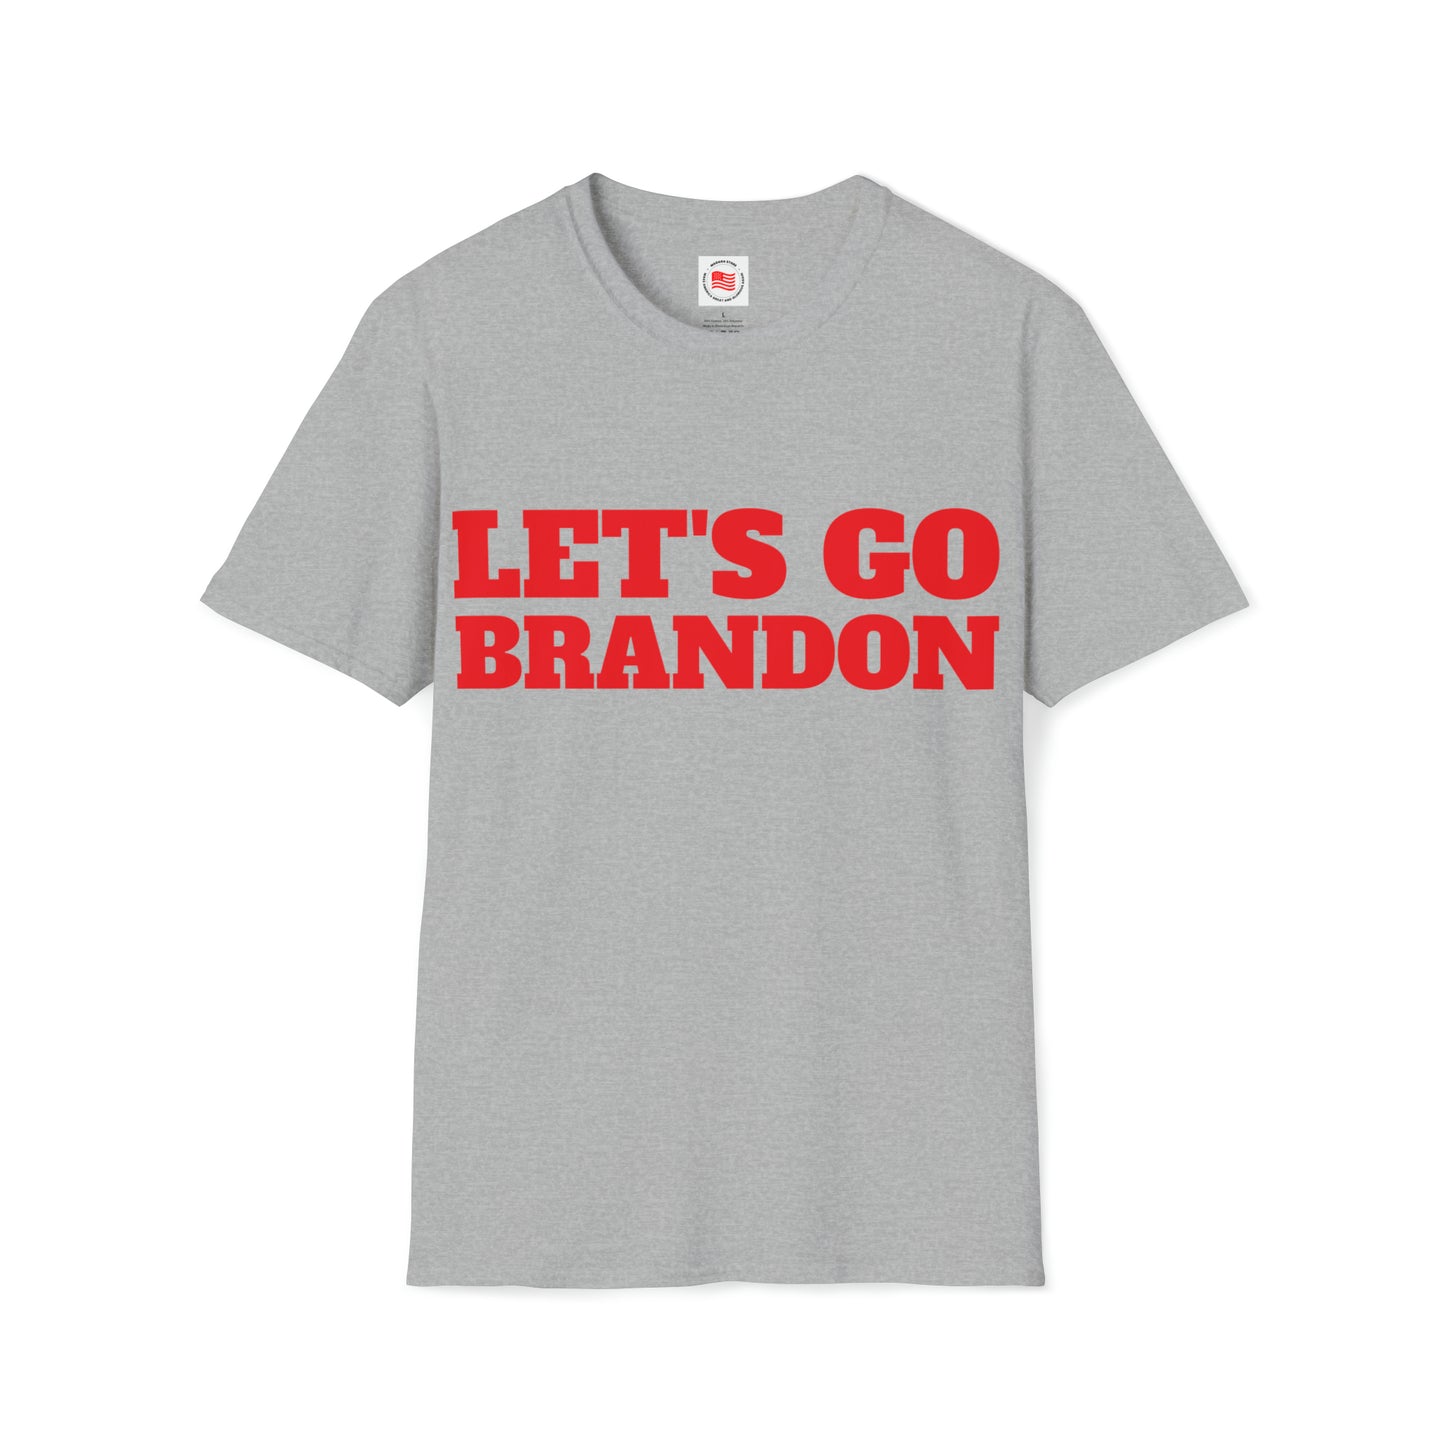 LETS GO BRANDON T-Shirt